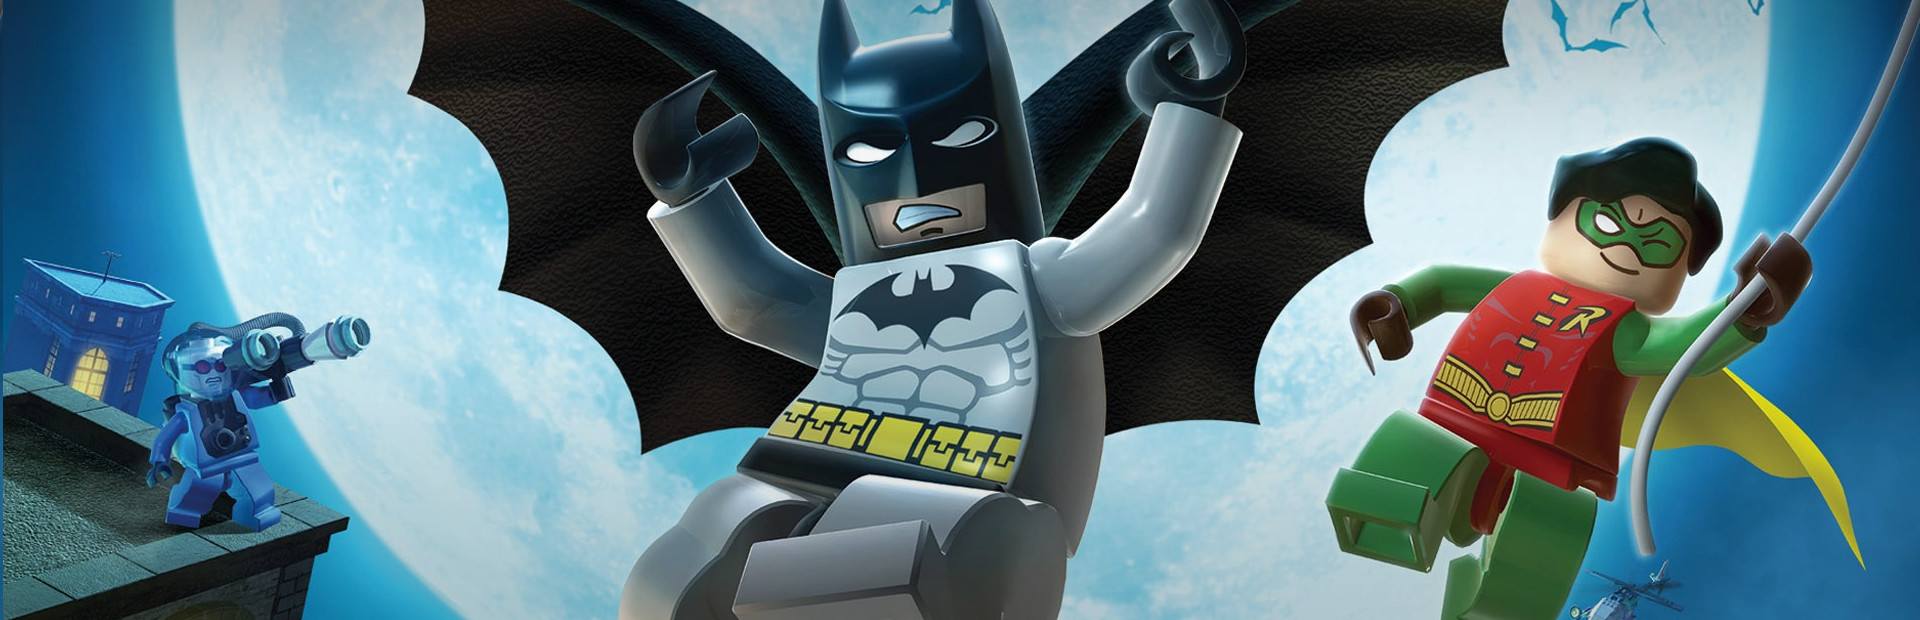 LEGO® Batman™: The Videogame cover image